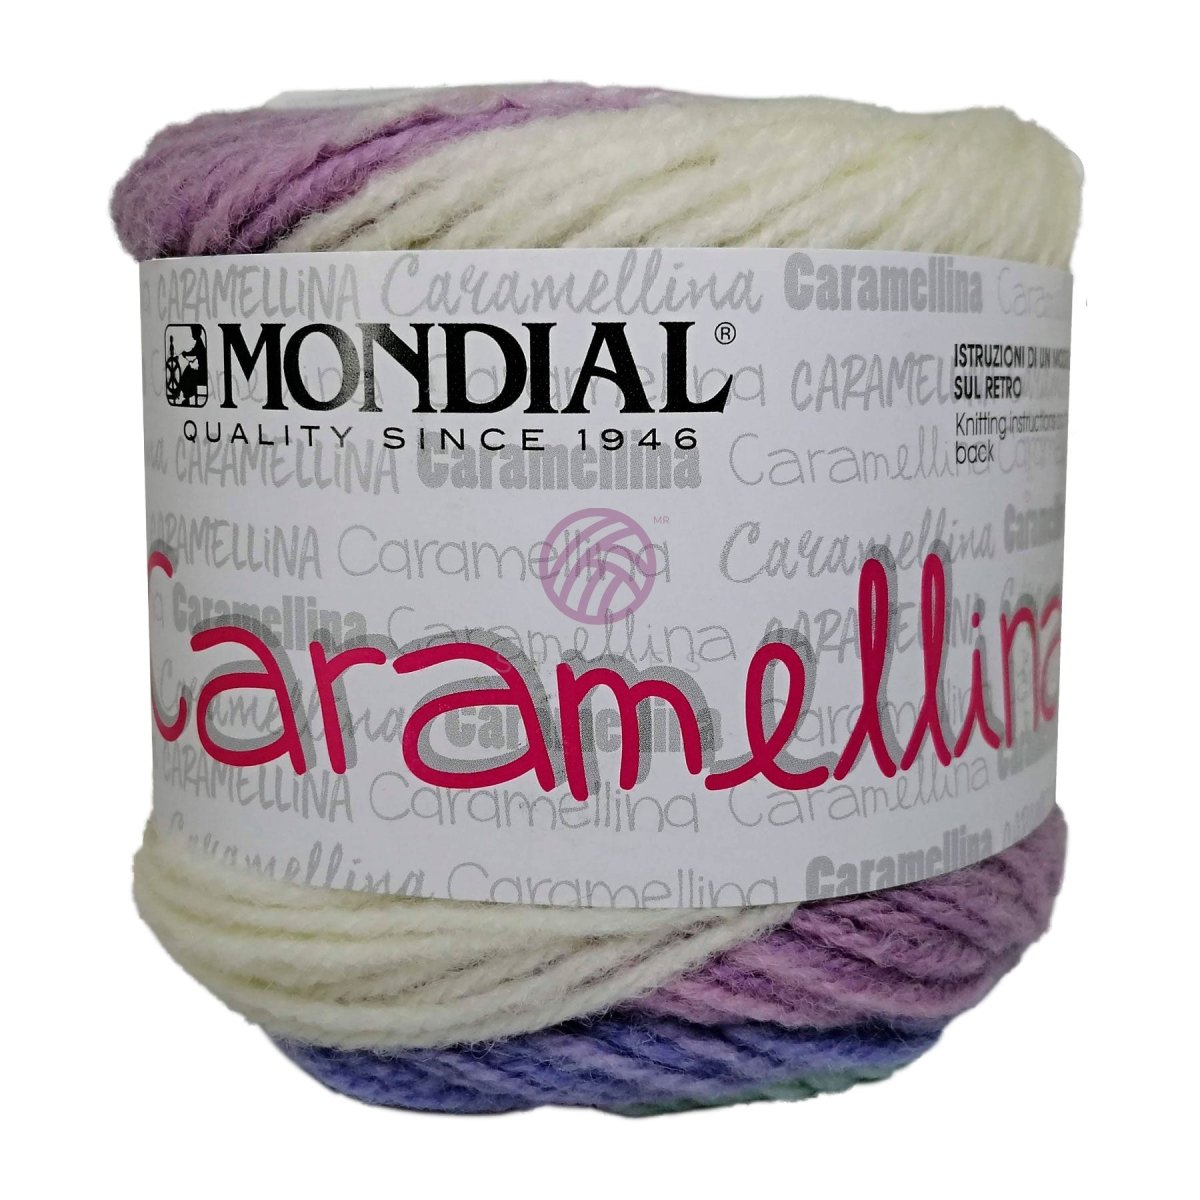 CARAMELLINA - Crochetstores12519138020586352852